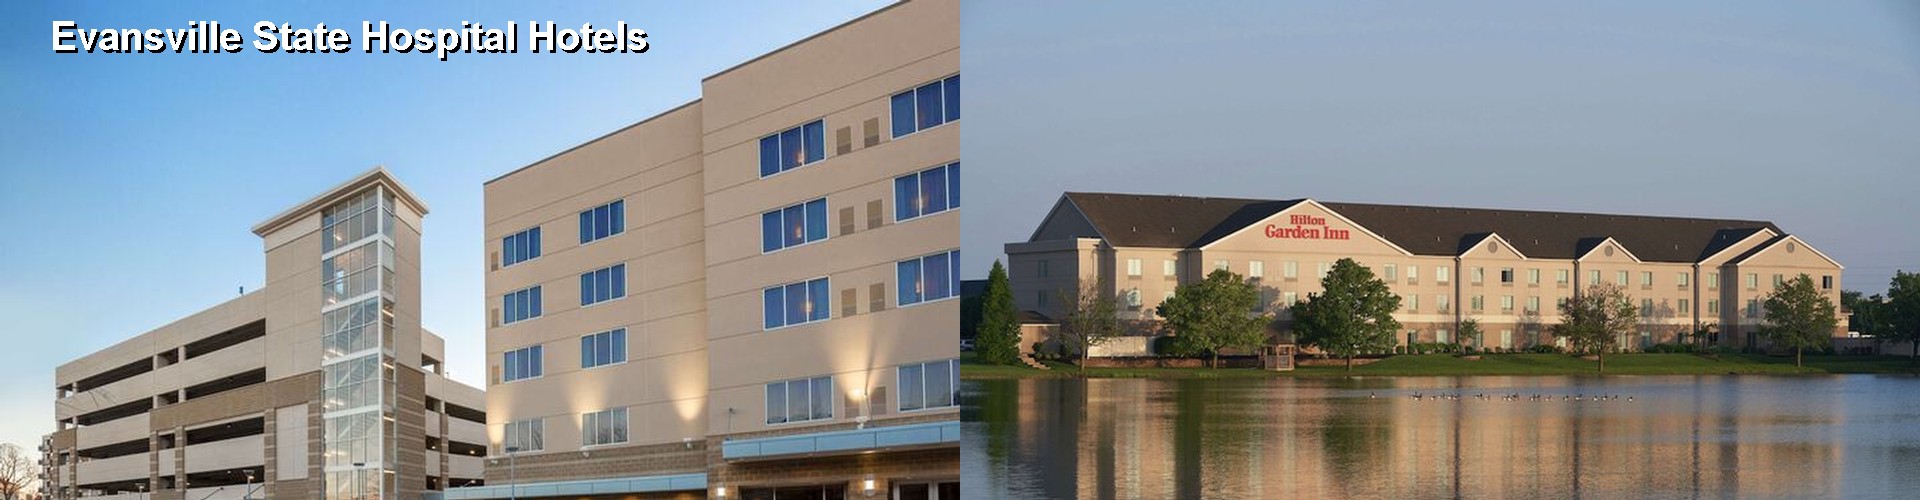 5 Best Hotels near Evansville State Hospital